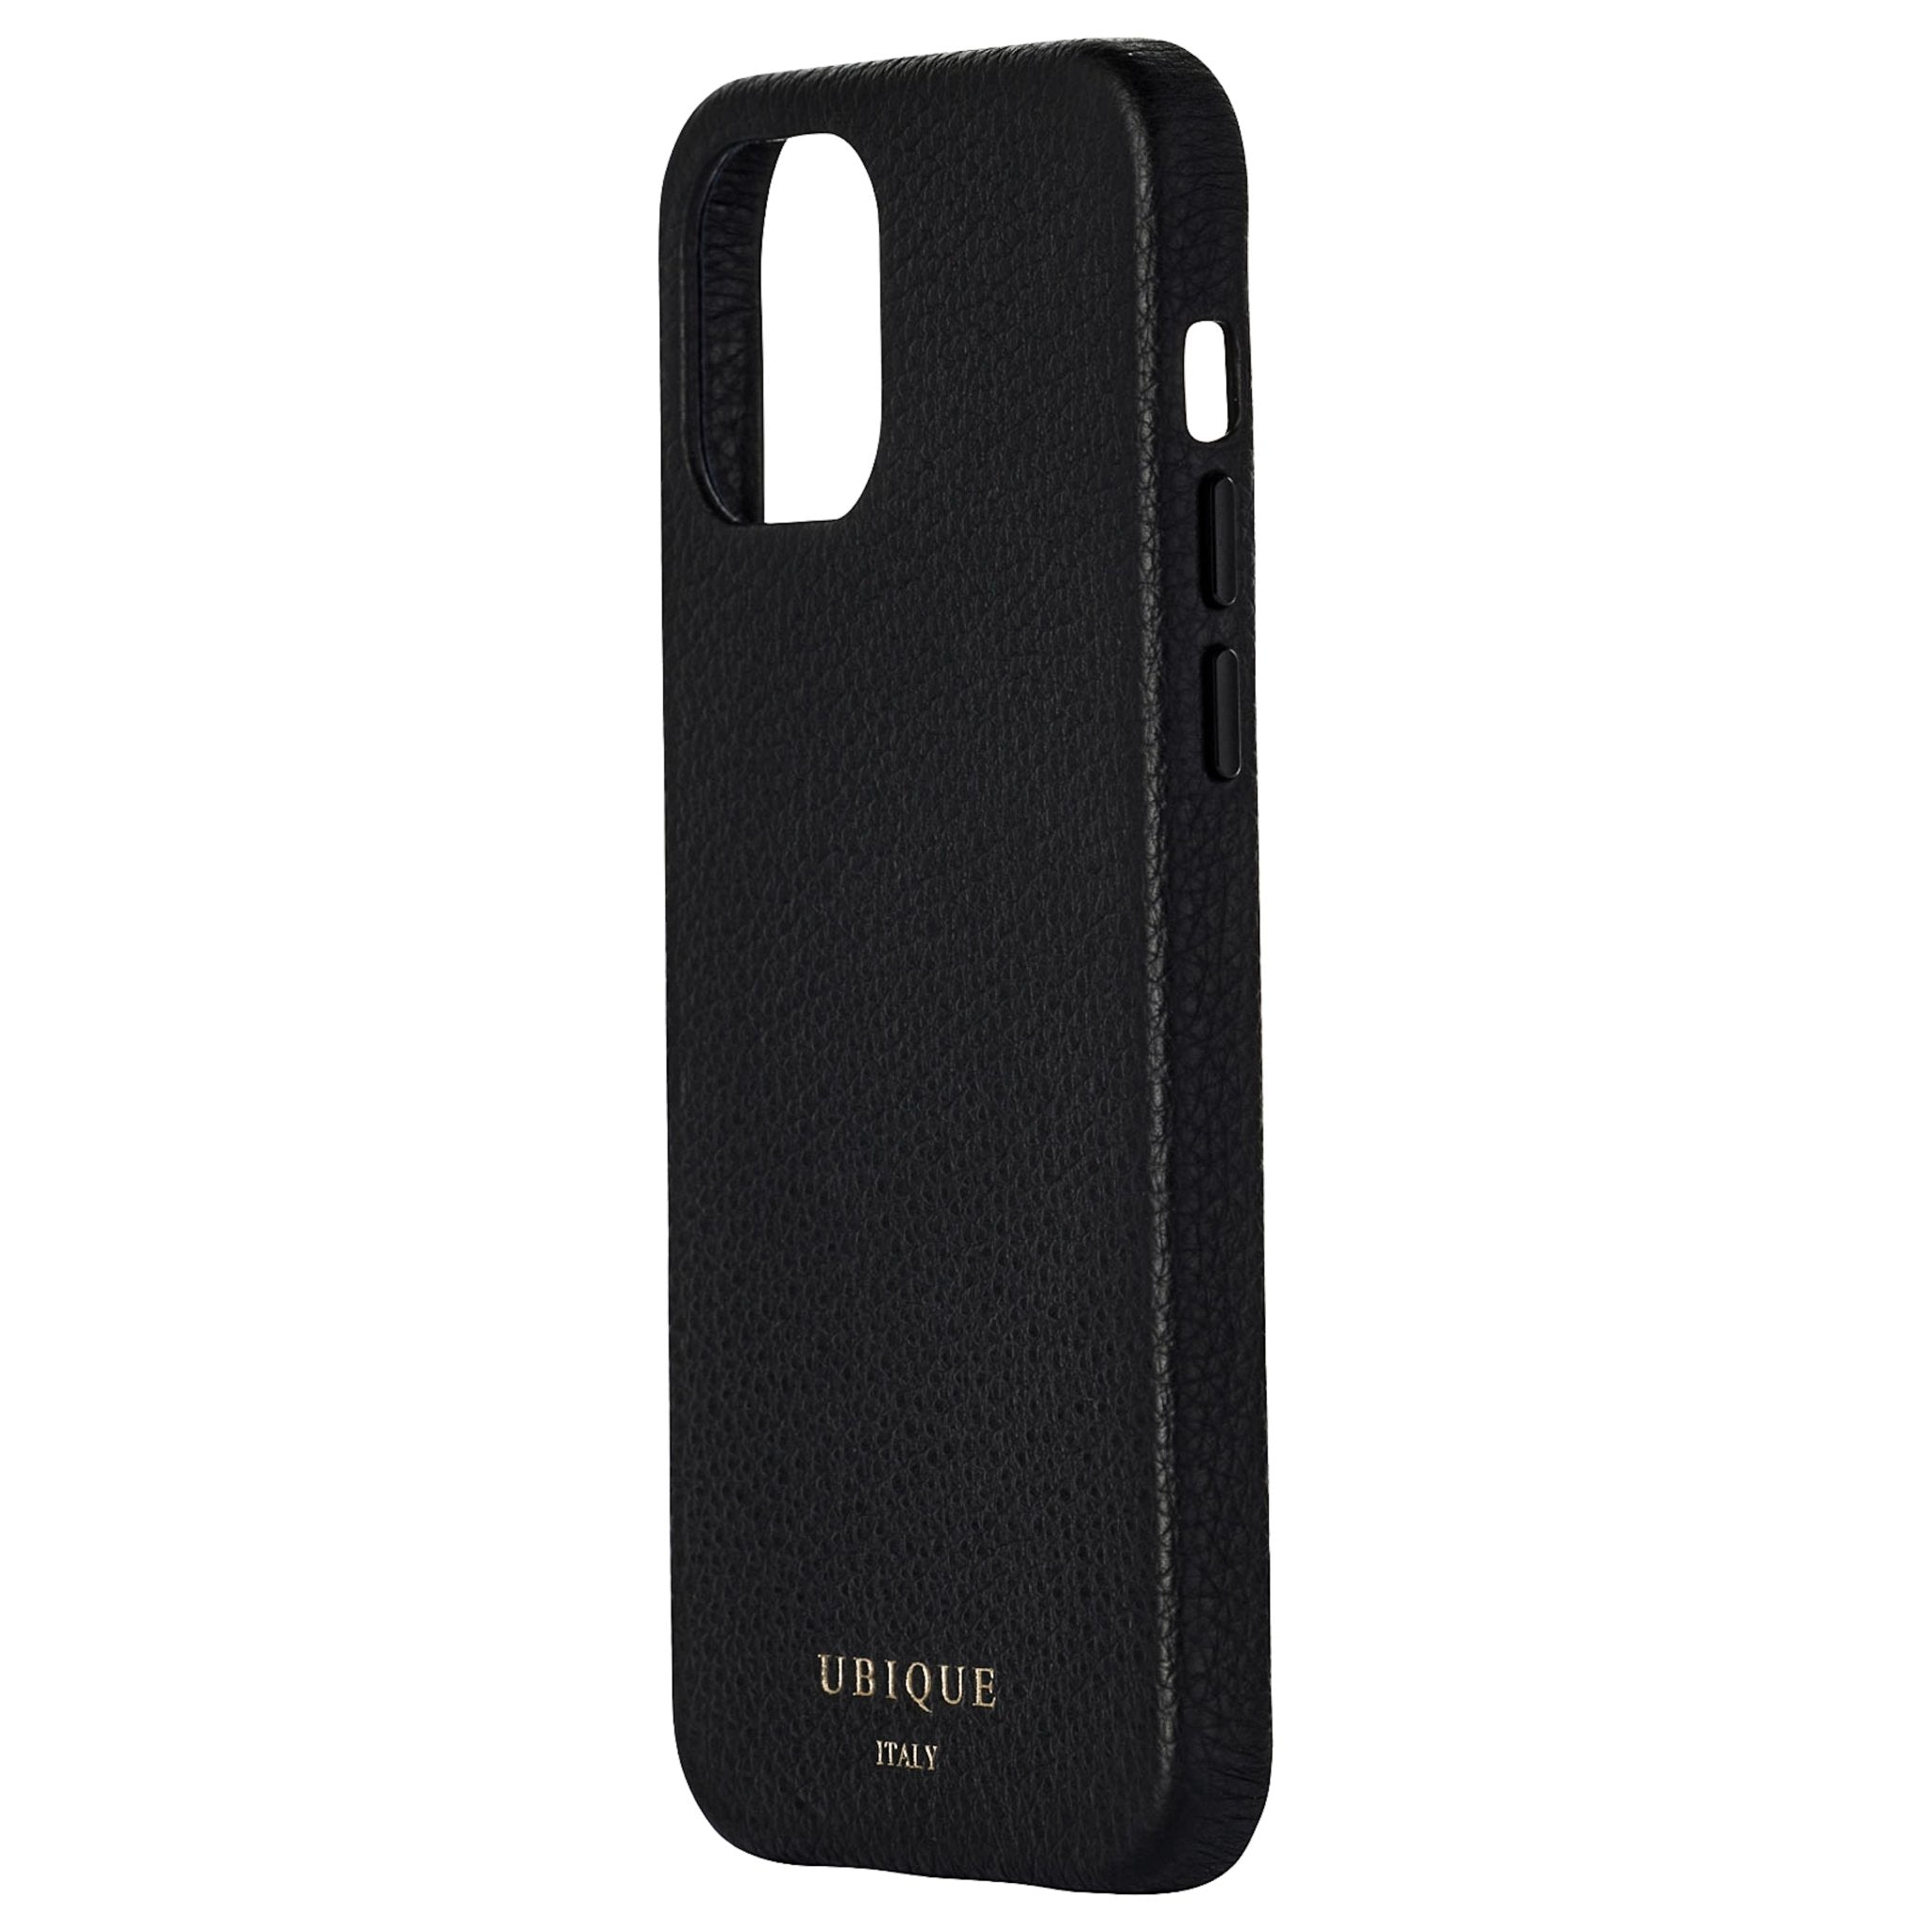 Ubique Italy Luxury iPhone Case 12 Pebble Grain Leather Black Angled